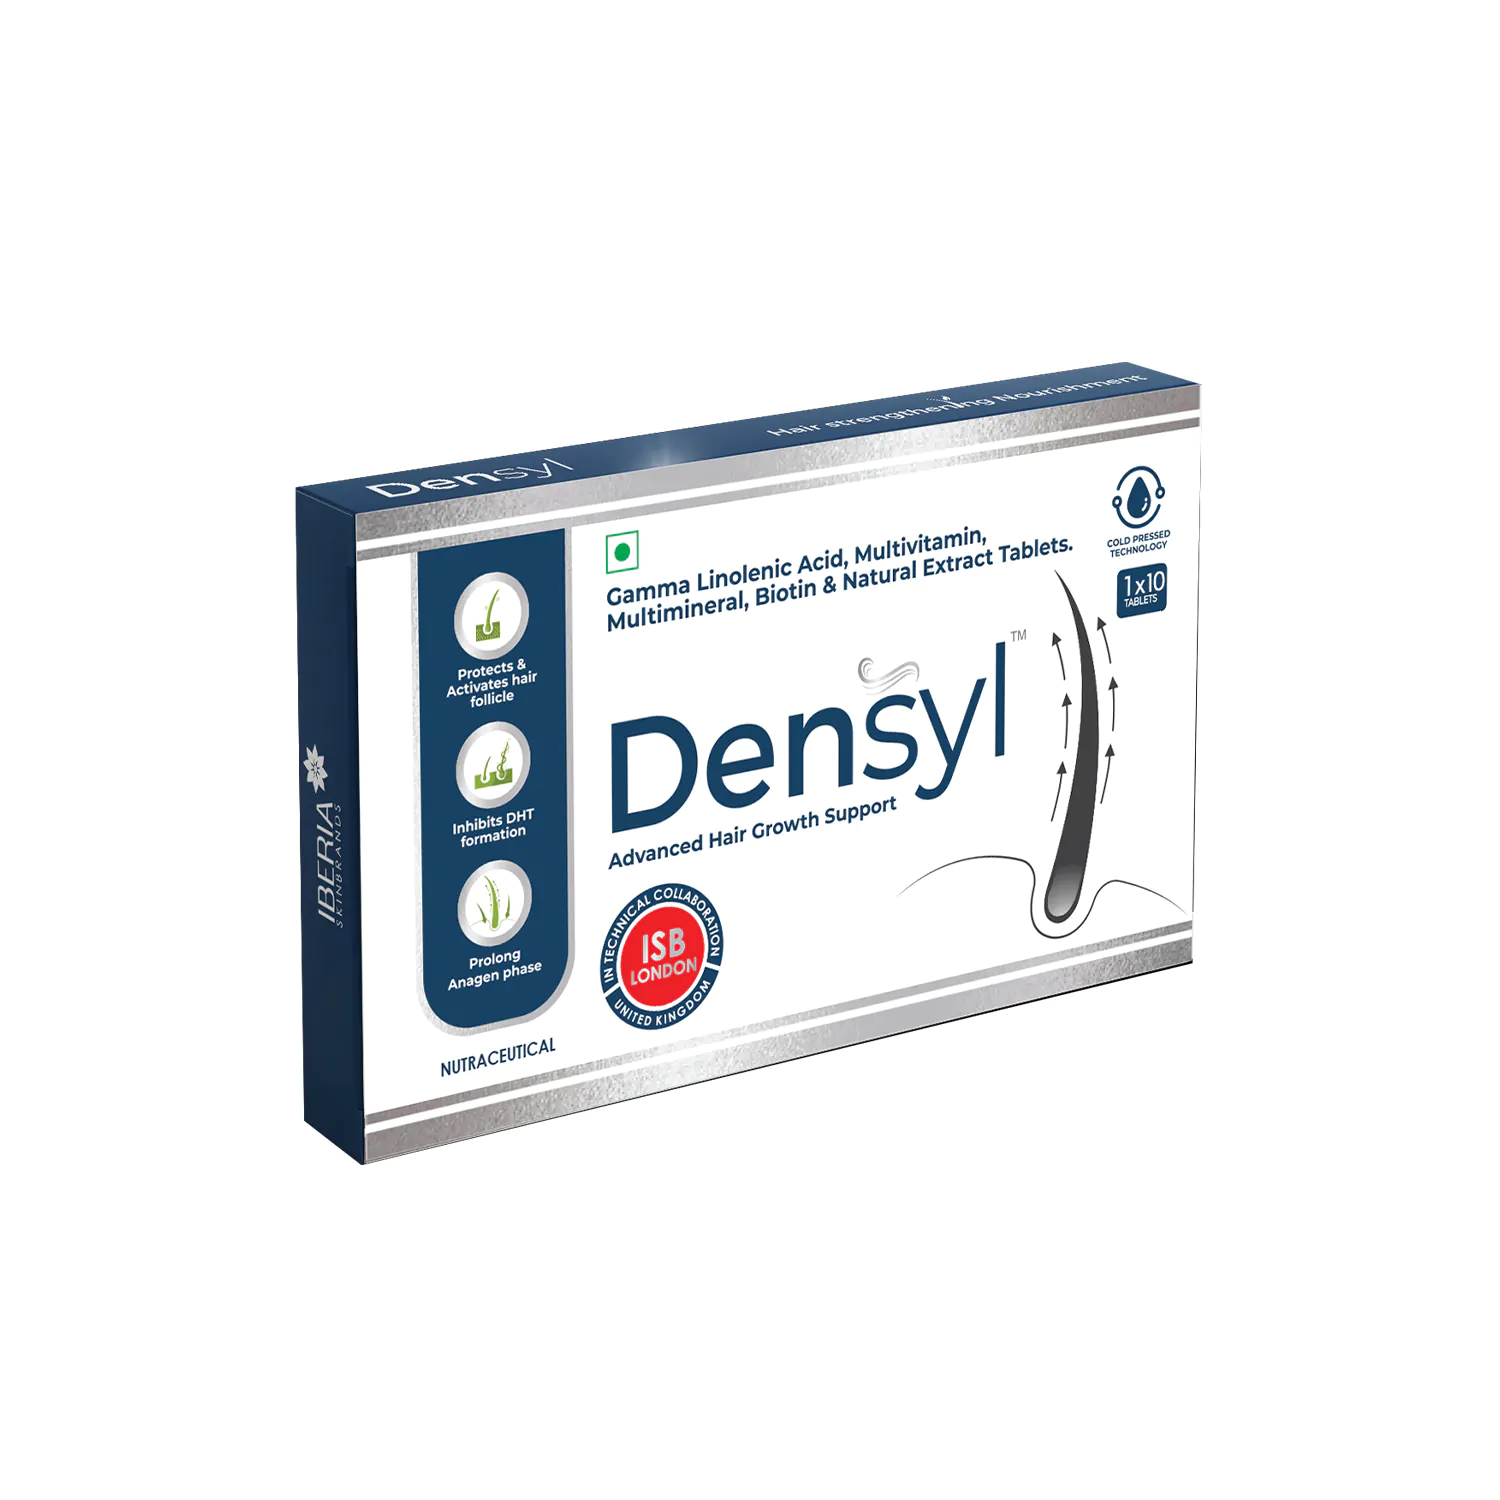 Densyl tablets